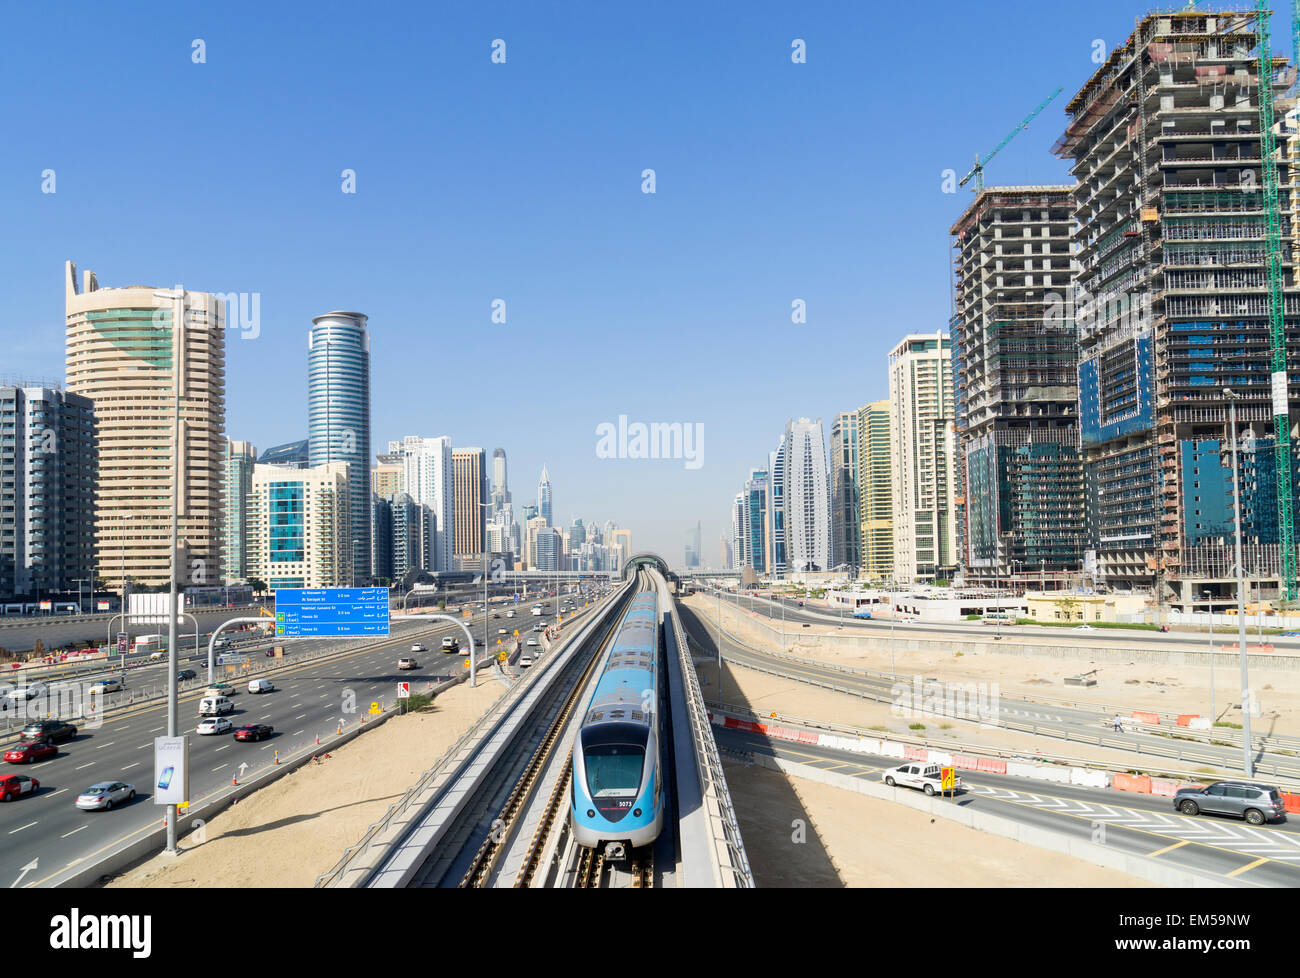 Metro train and skyline of Dubai at Jumeirah Lakes Towers (JLT)  in Dubai United Arab Emirates Stock Photo